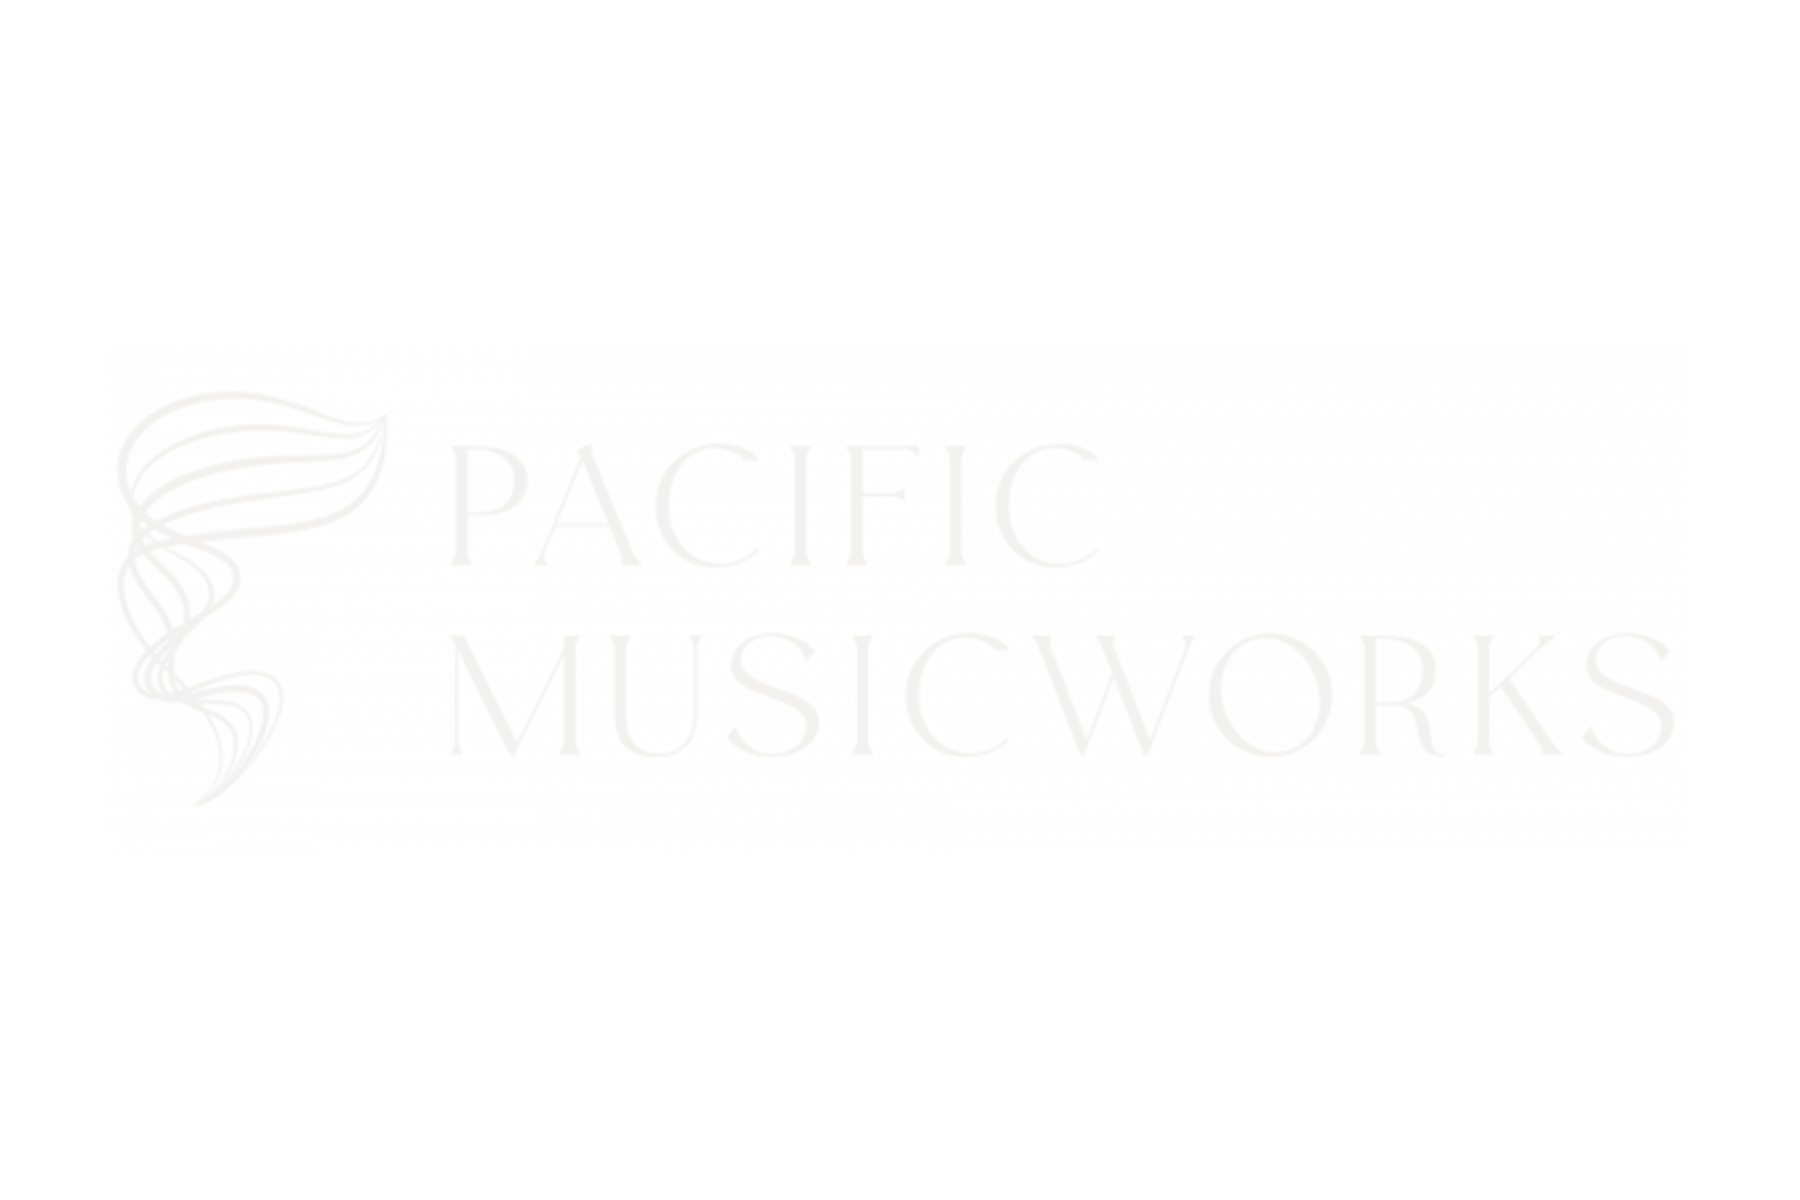 Pacific Musicworks